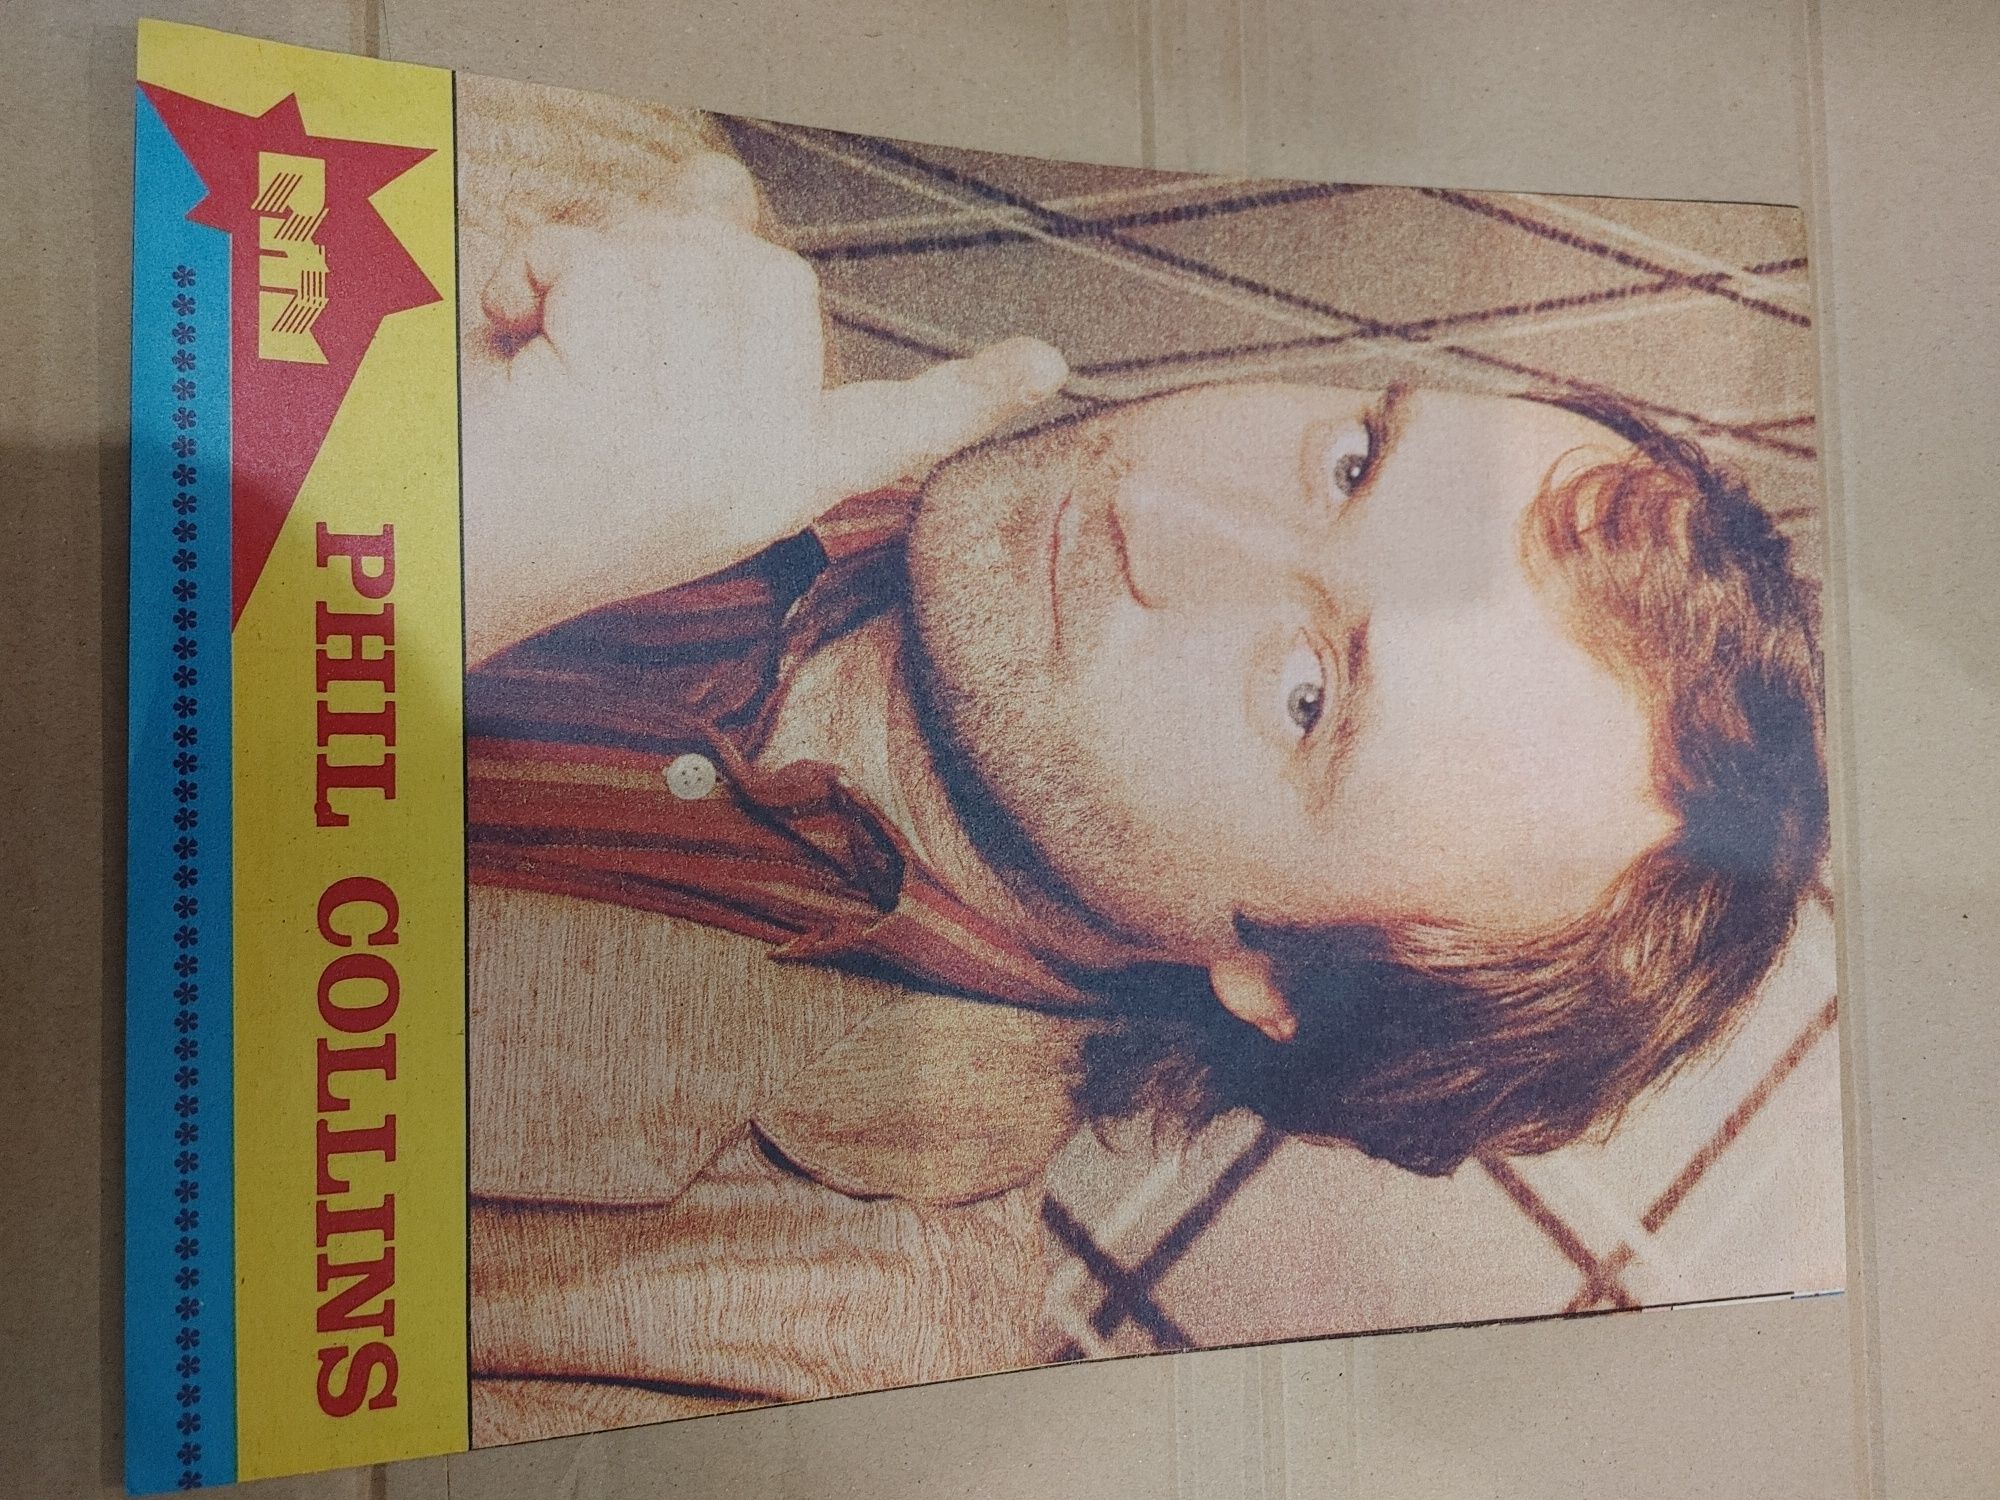 Stare plakaty Phil Collins